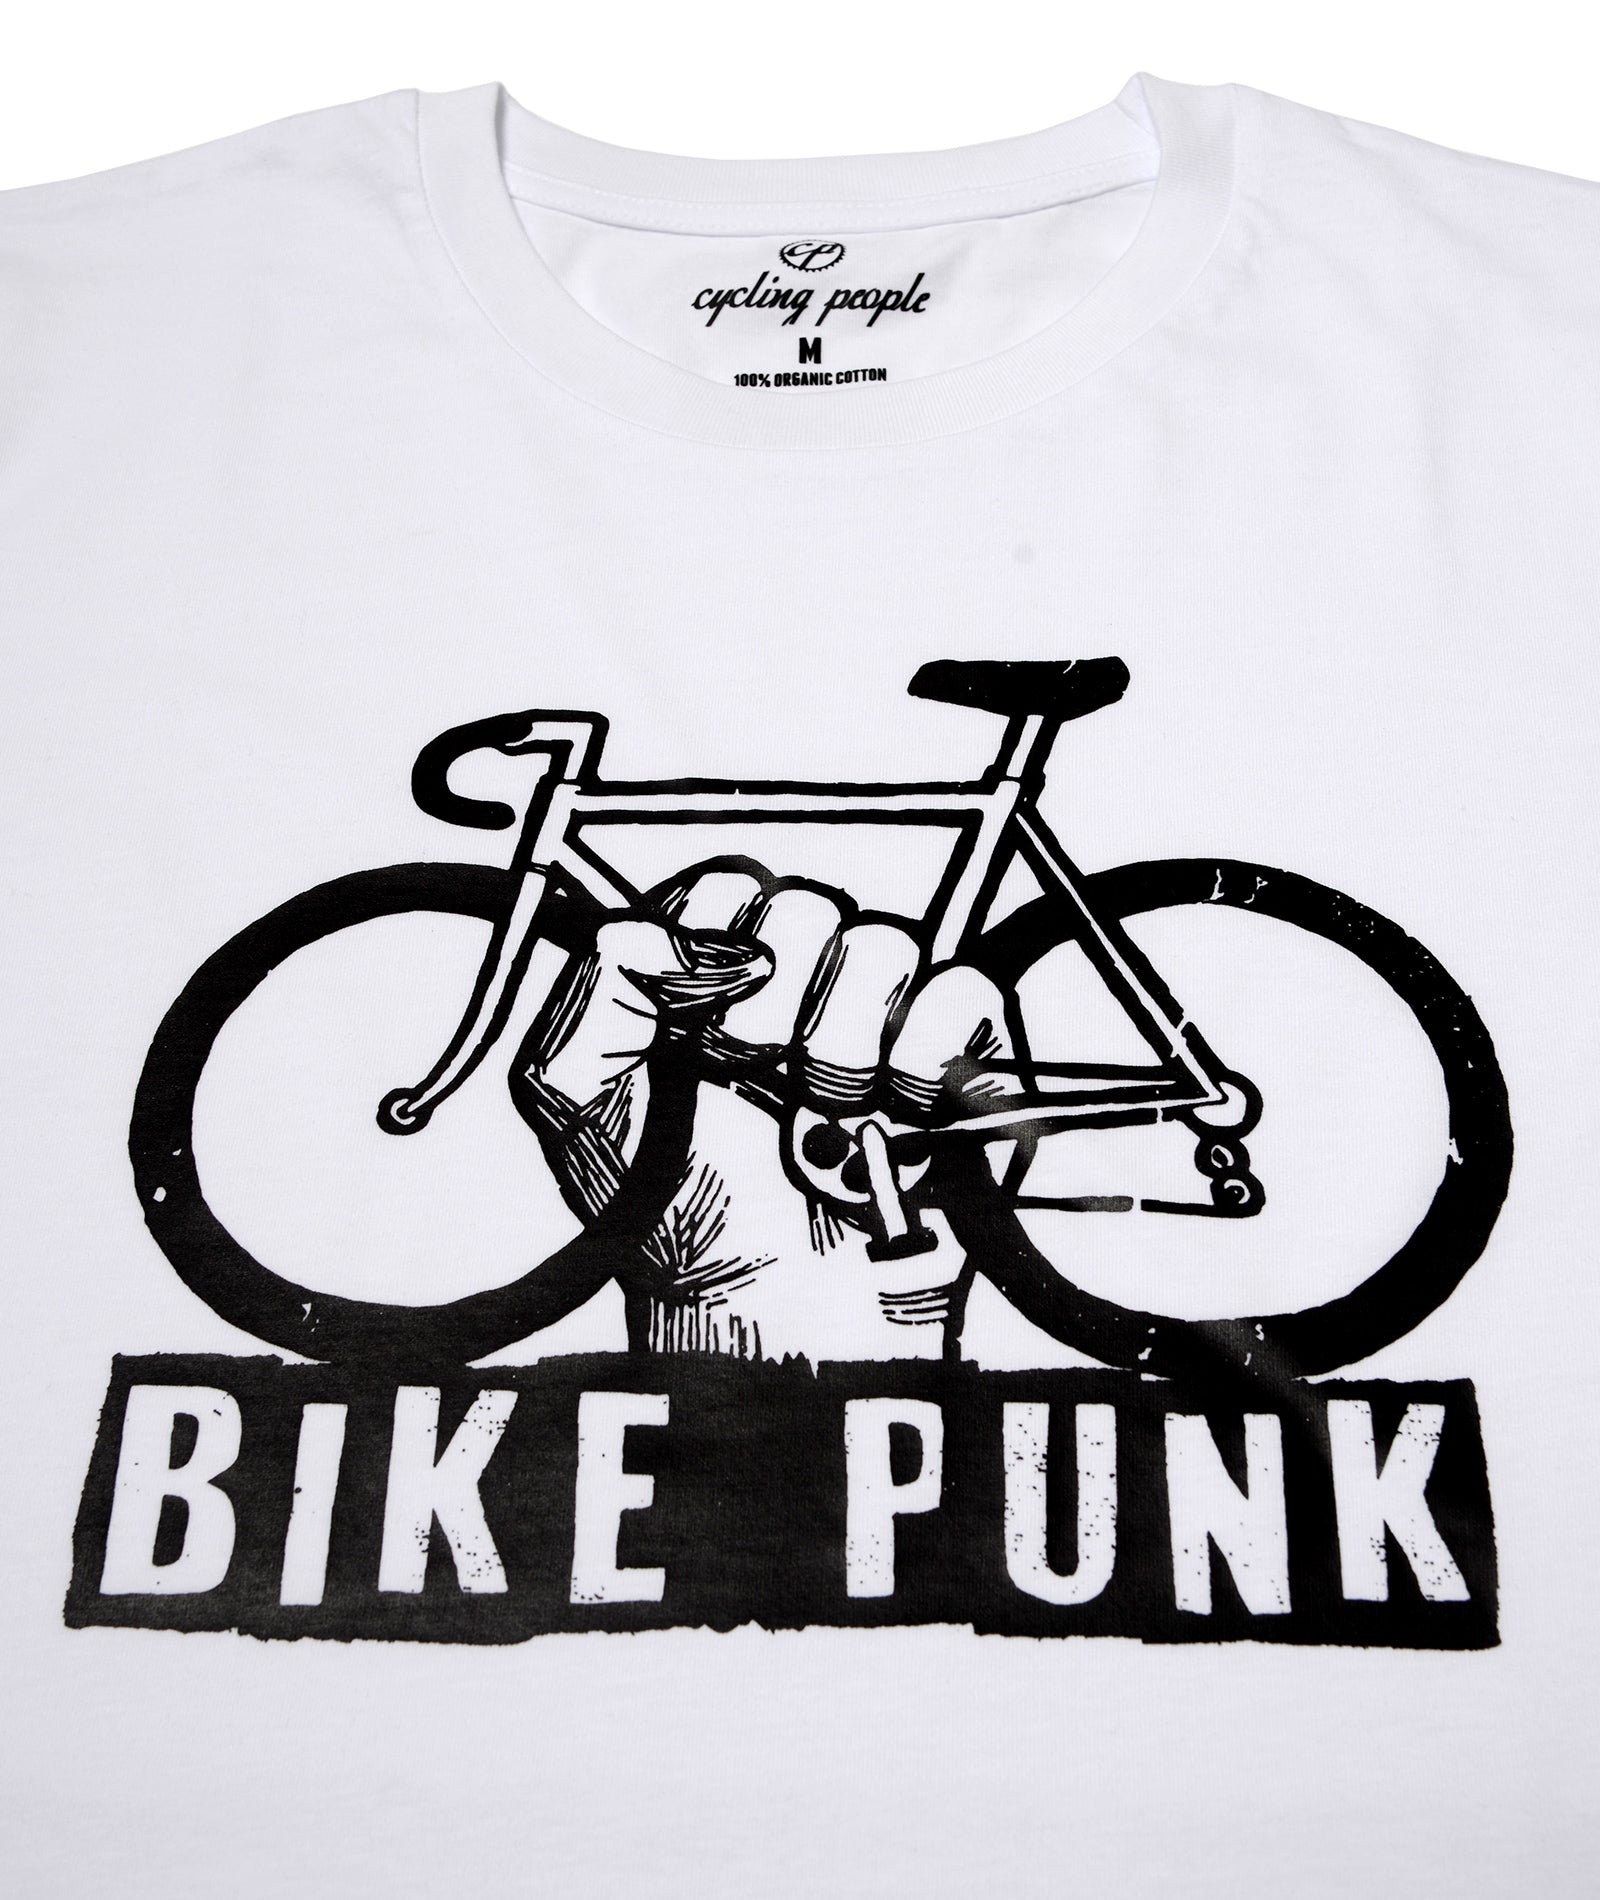 Bike Punk MEN'S T-SHIRT